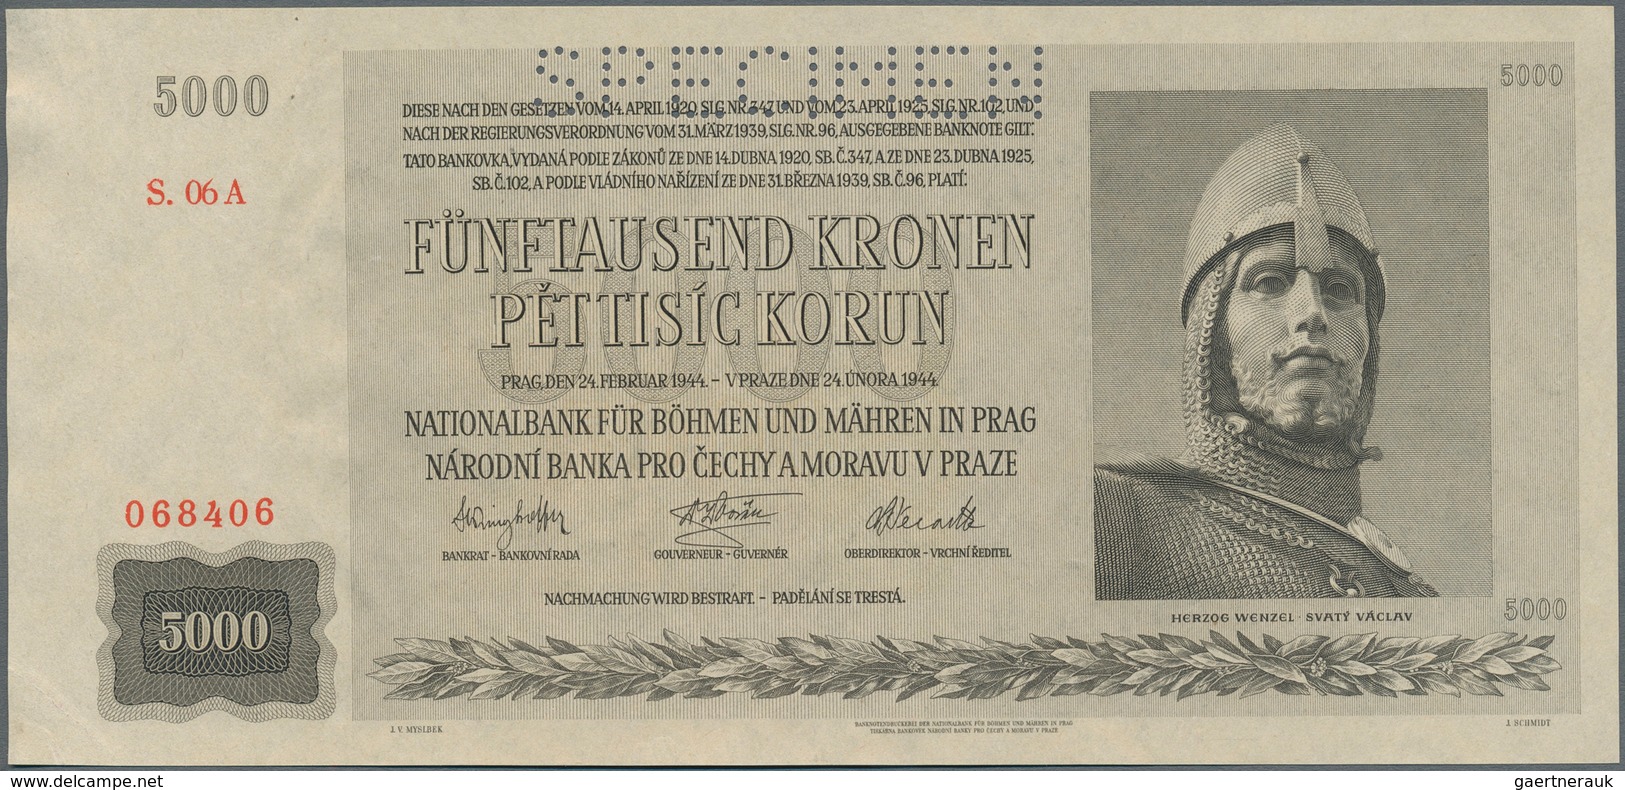 Czechoslovakia / Tschechoslowakei: Huge collectors album with more than 280 banknotes Austria, Czech